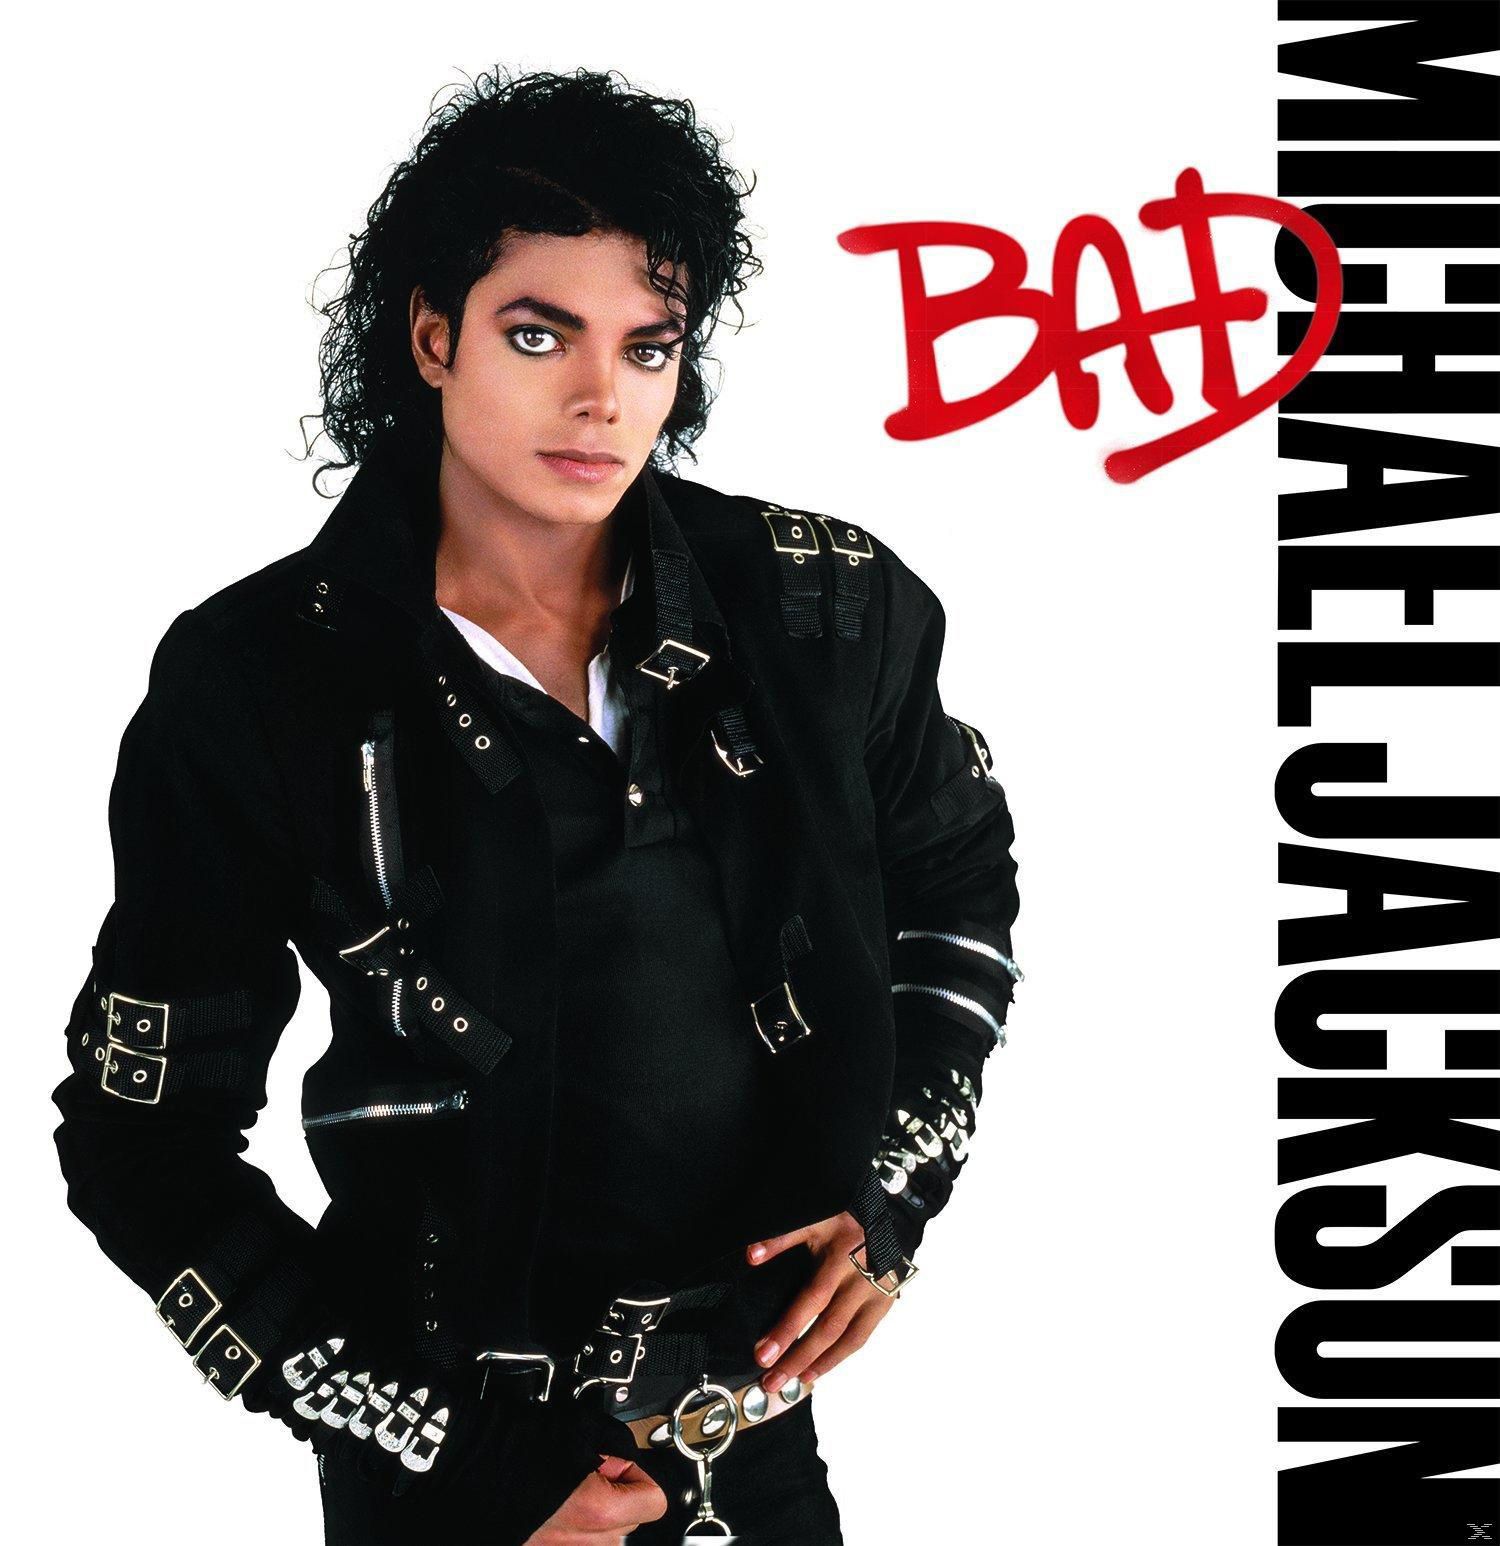 - Bad Jackson Michael - (Vinyl)